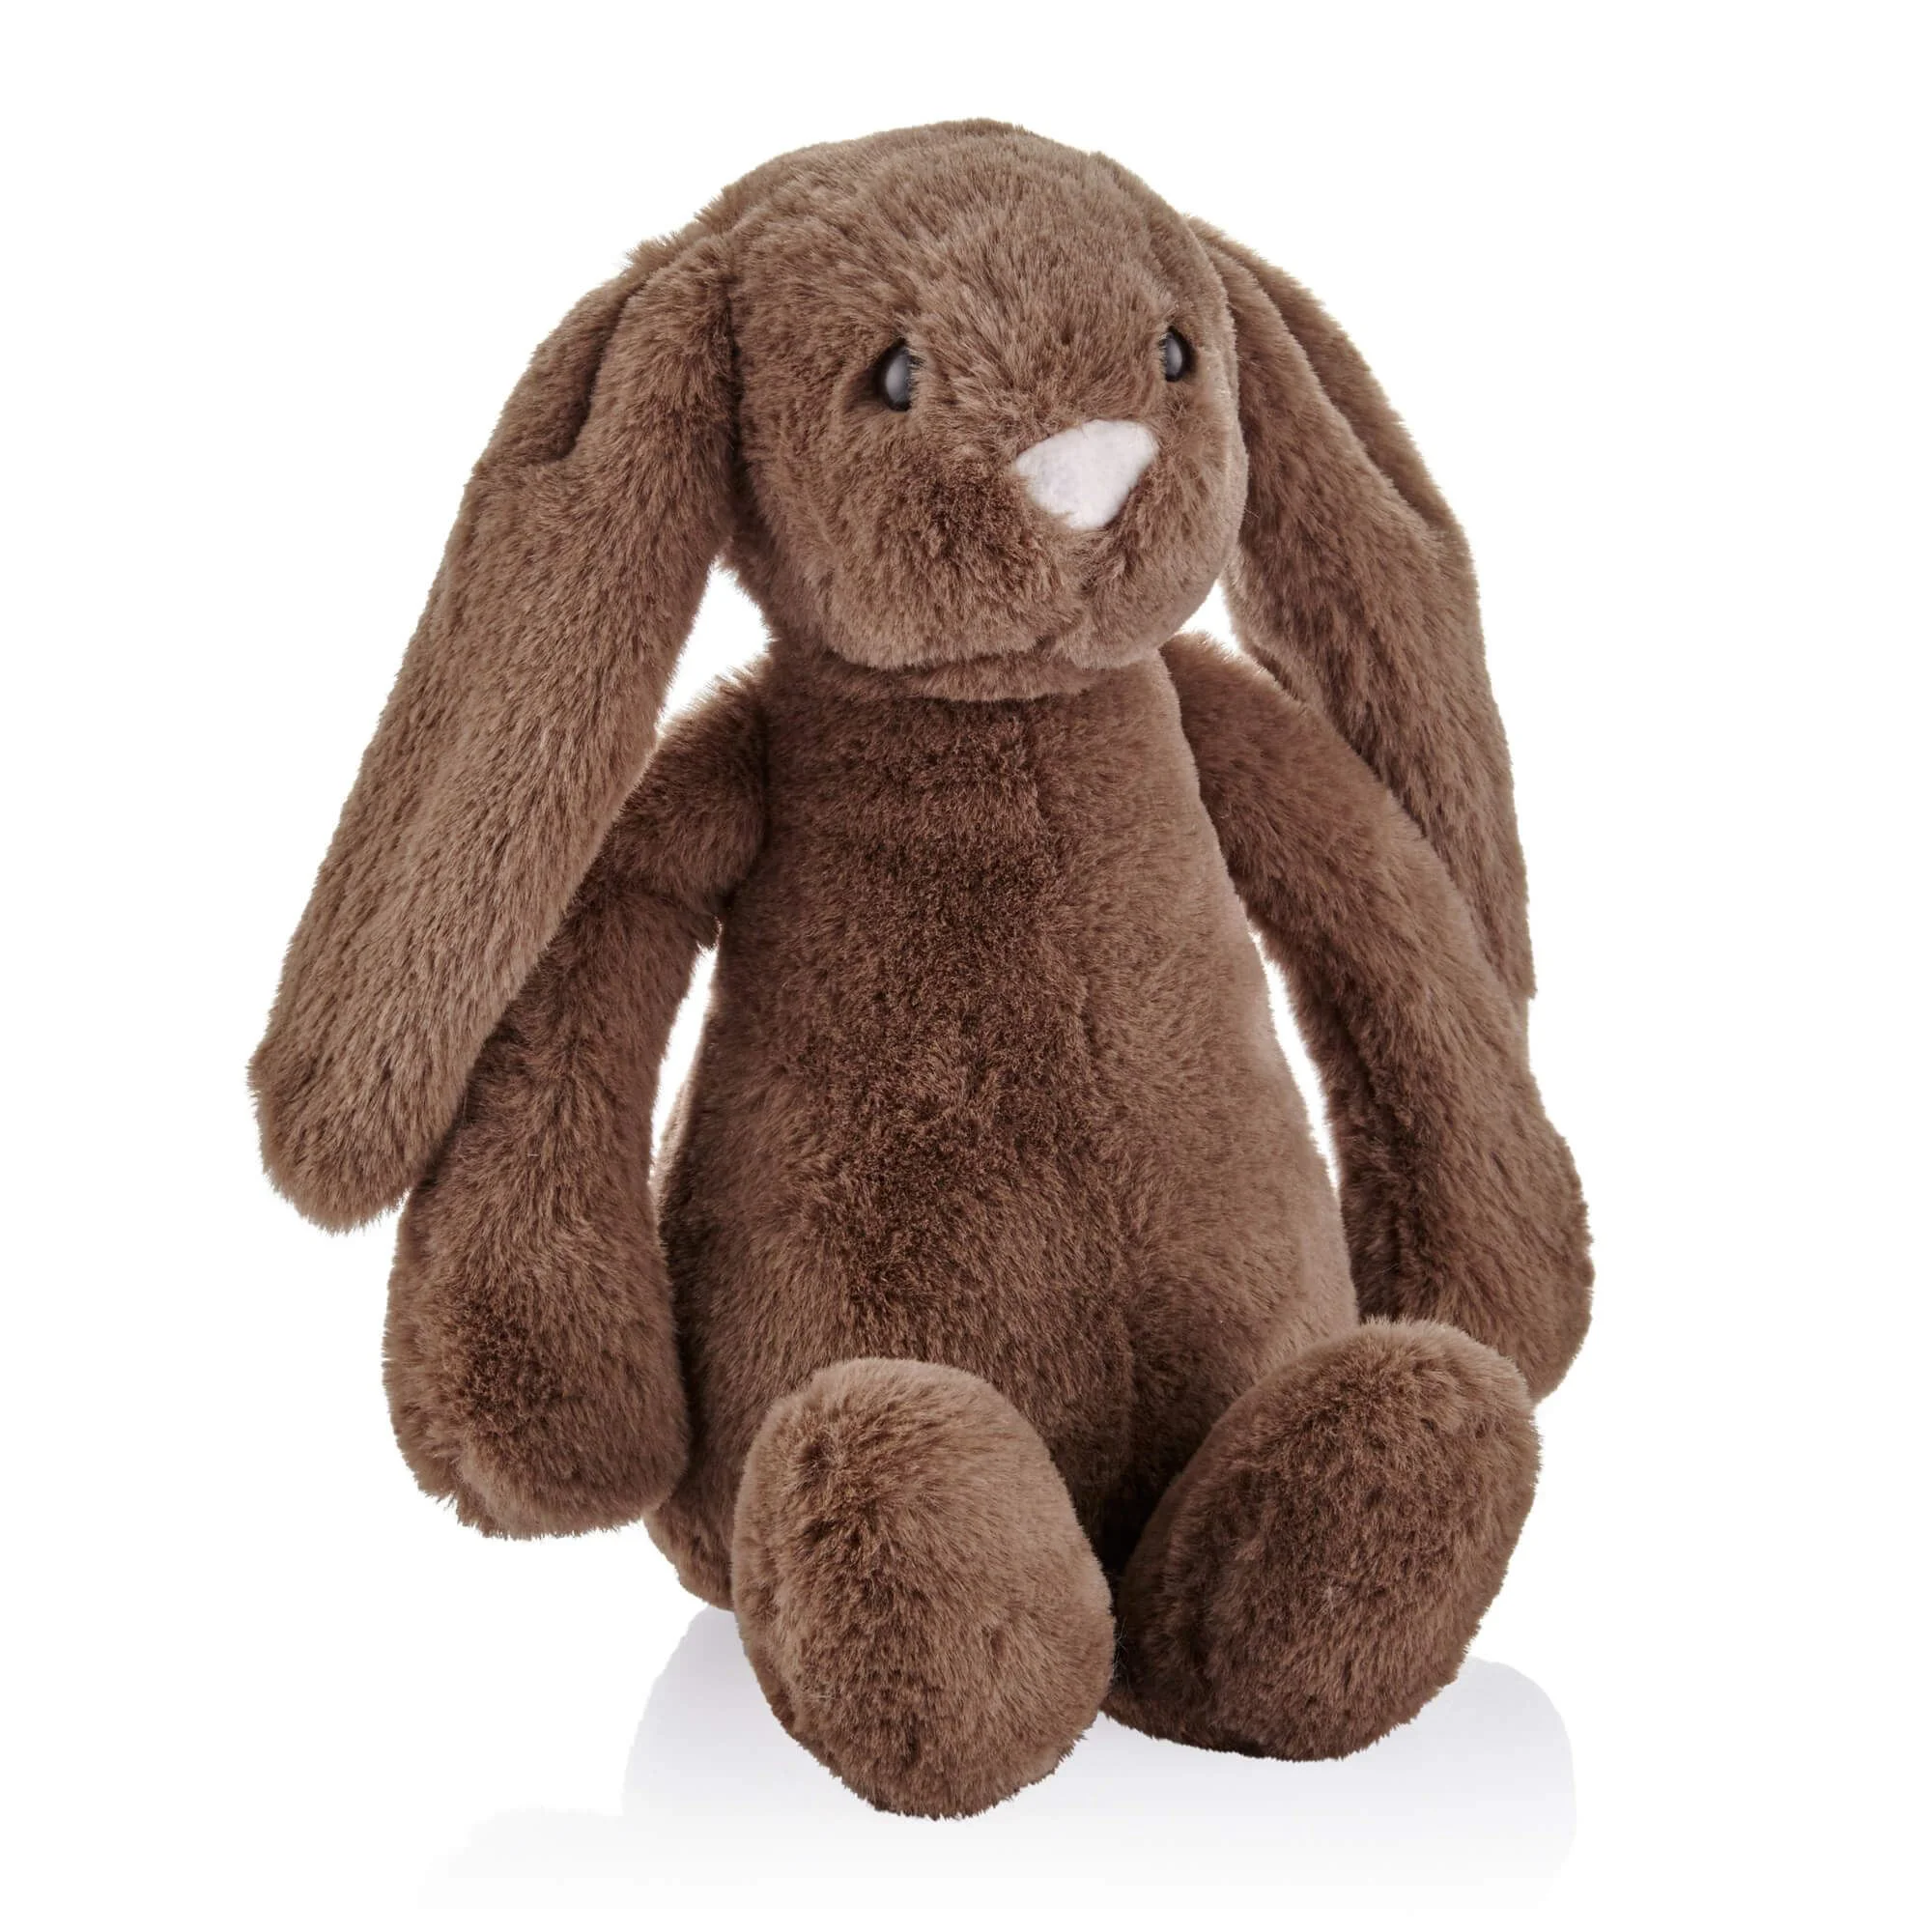 Плюшевая игрушка BabyJem The Beast Bunny Dark Brown, 30 см